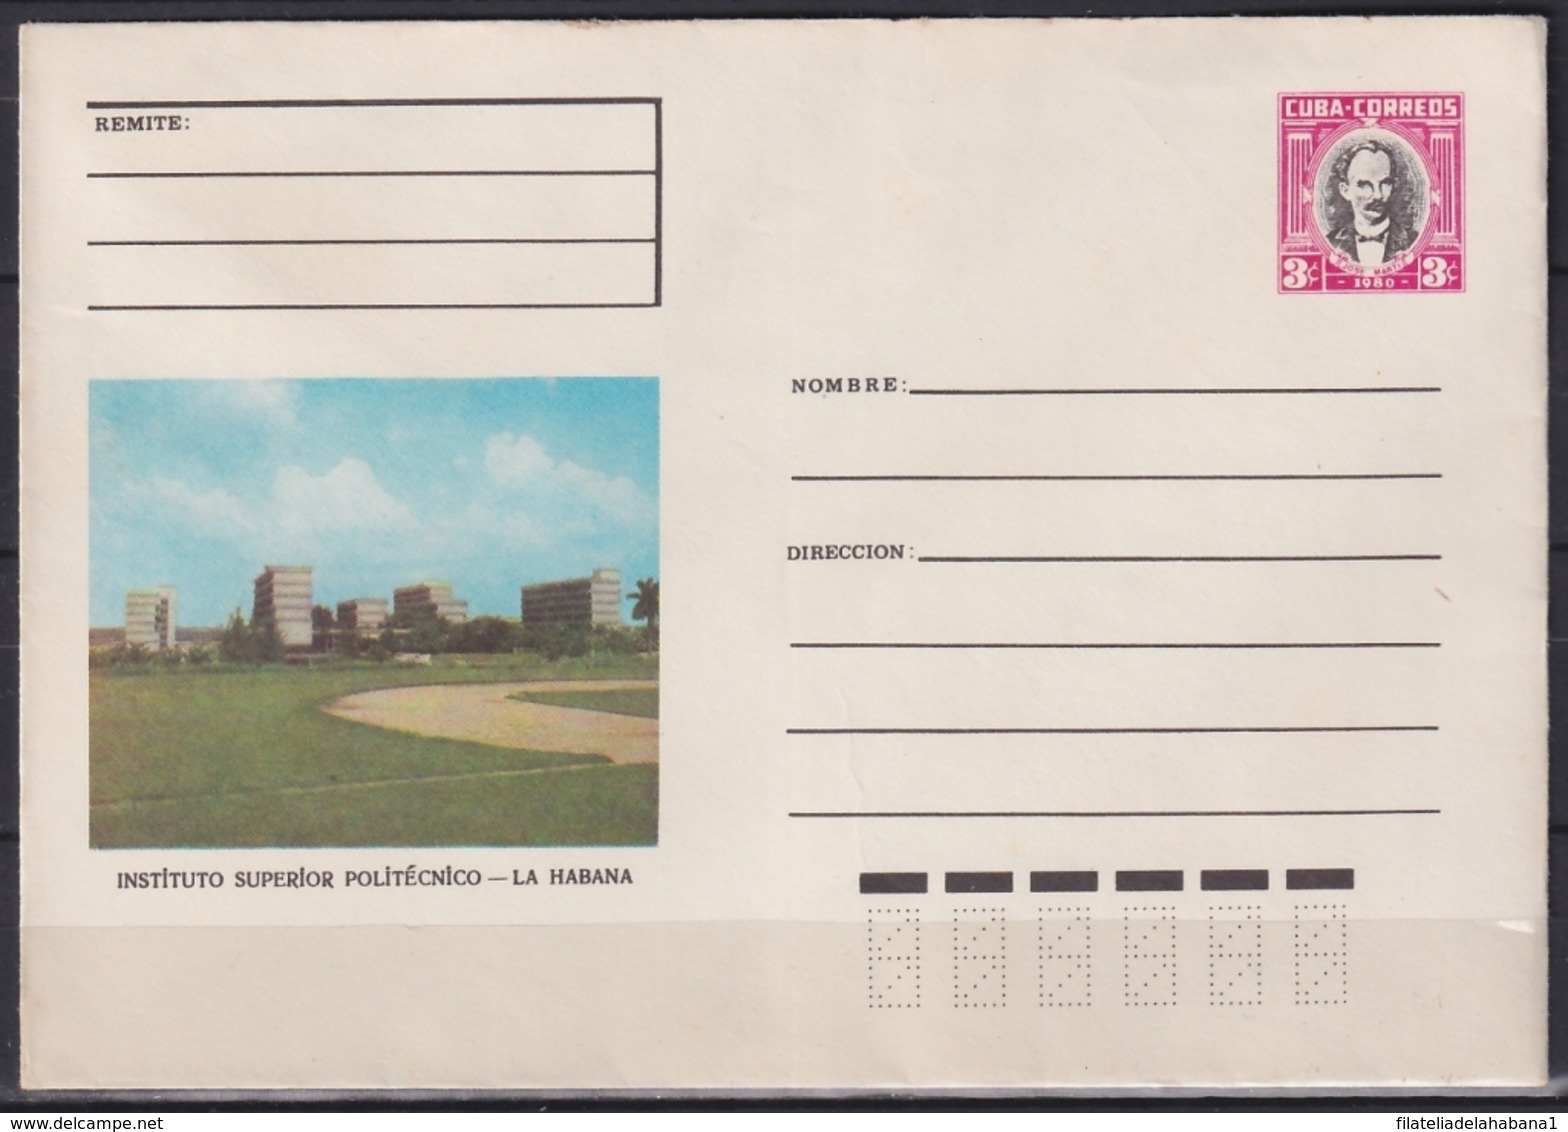 1980-EP-151 CUBA 1980 3c POSTAL STATIONERY COVER. HAVANA, INSTITUTO SUPERIOR POLITECNICO. - Covers & Documents